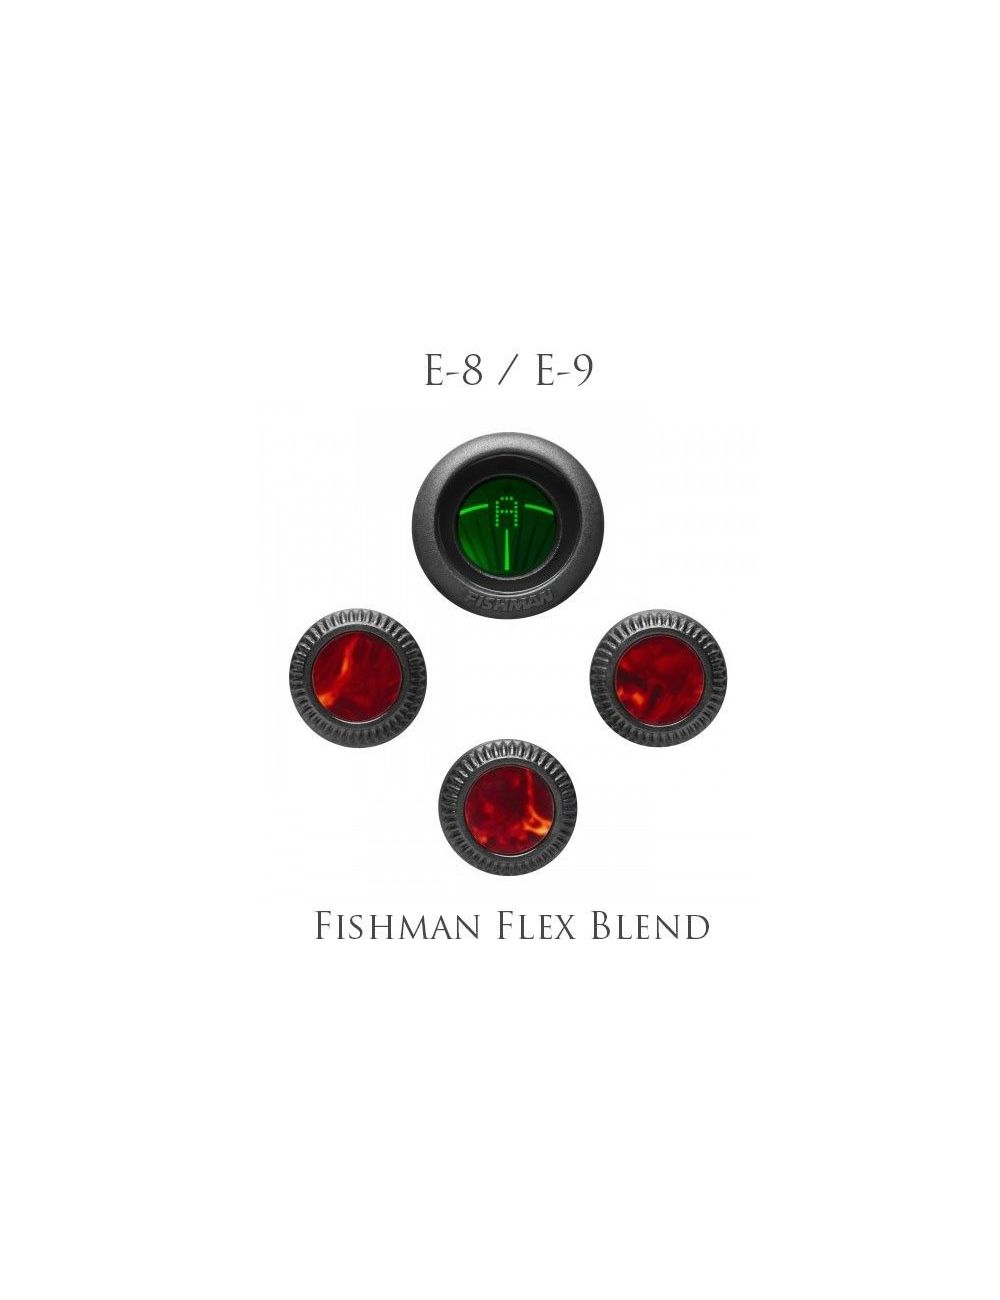 Option E8 Fishman Flex Blend